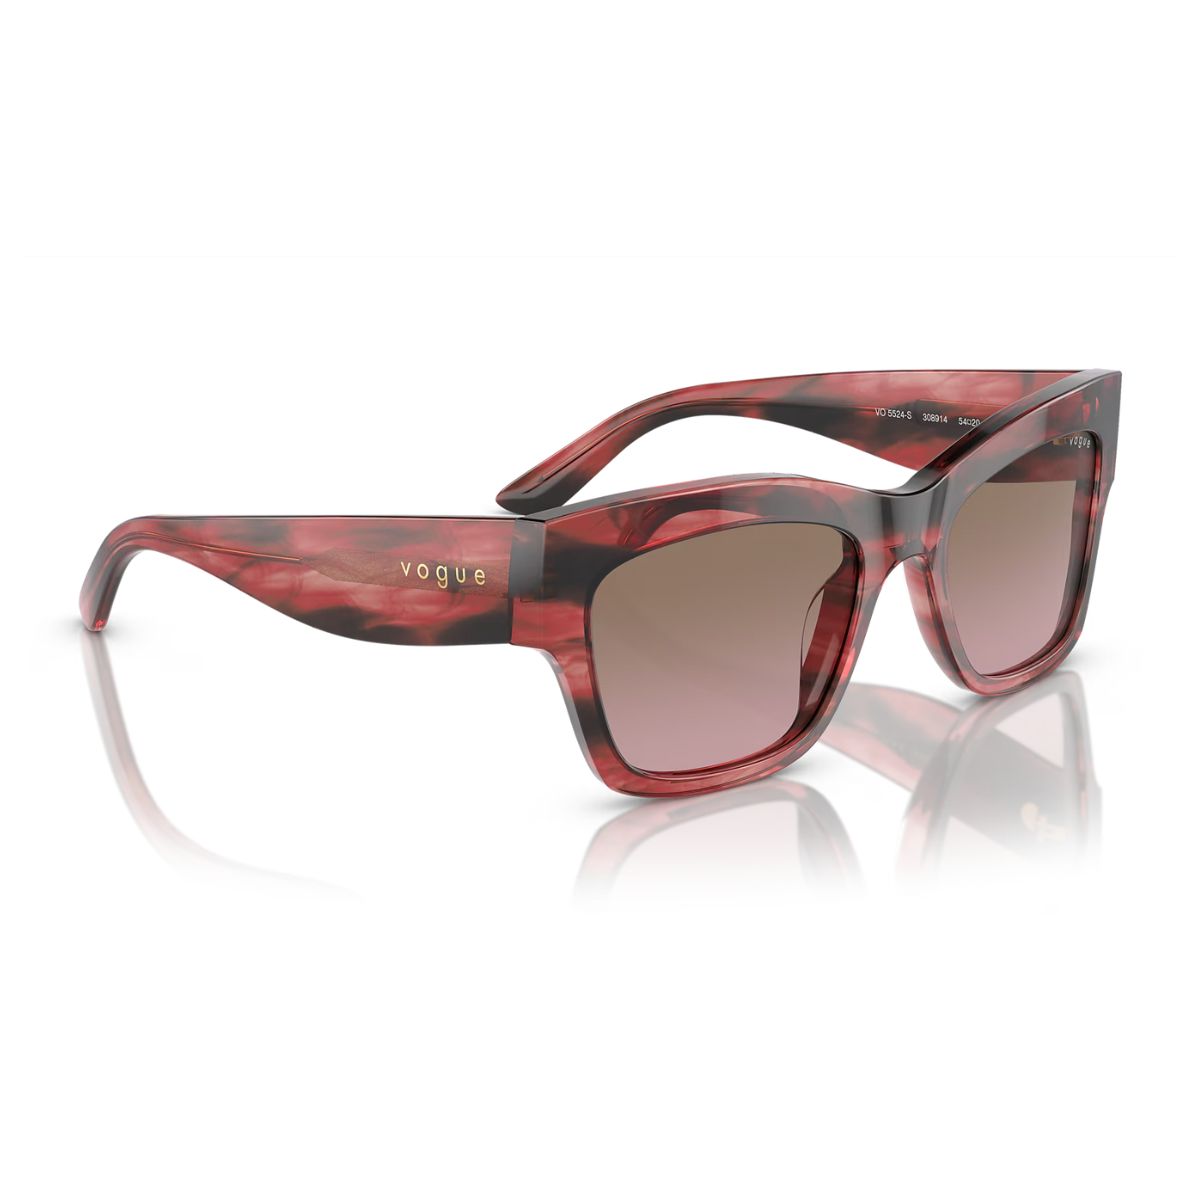 "Buy Latest Vogue UV Protection Rectangle Sunglasses For Women's | Optorium"